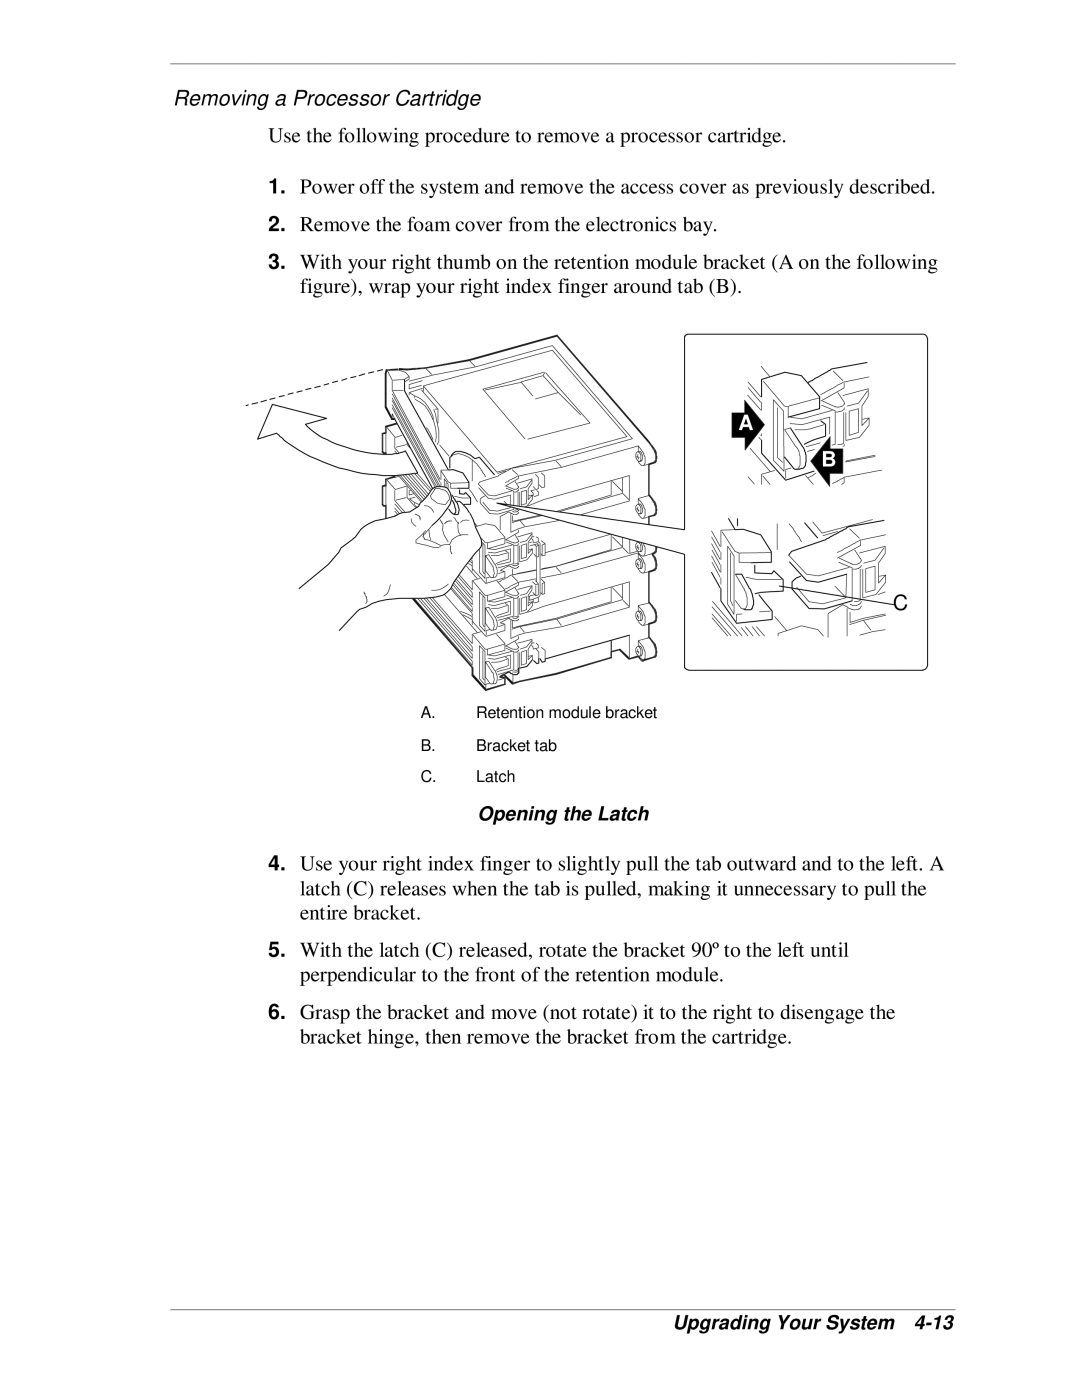 NEC MH4500 manual Removing a Processor Cartridge 